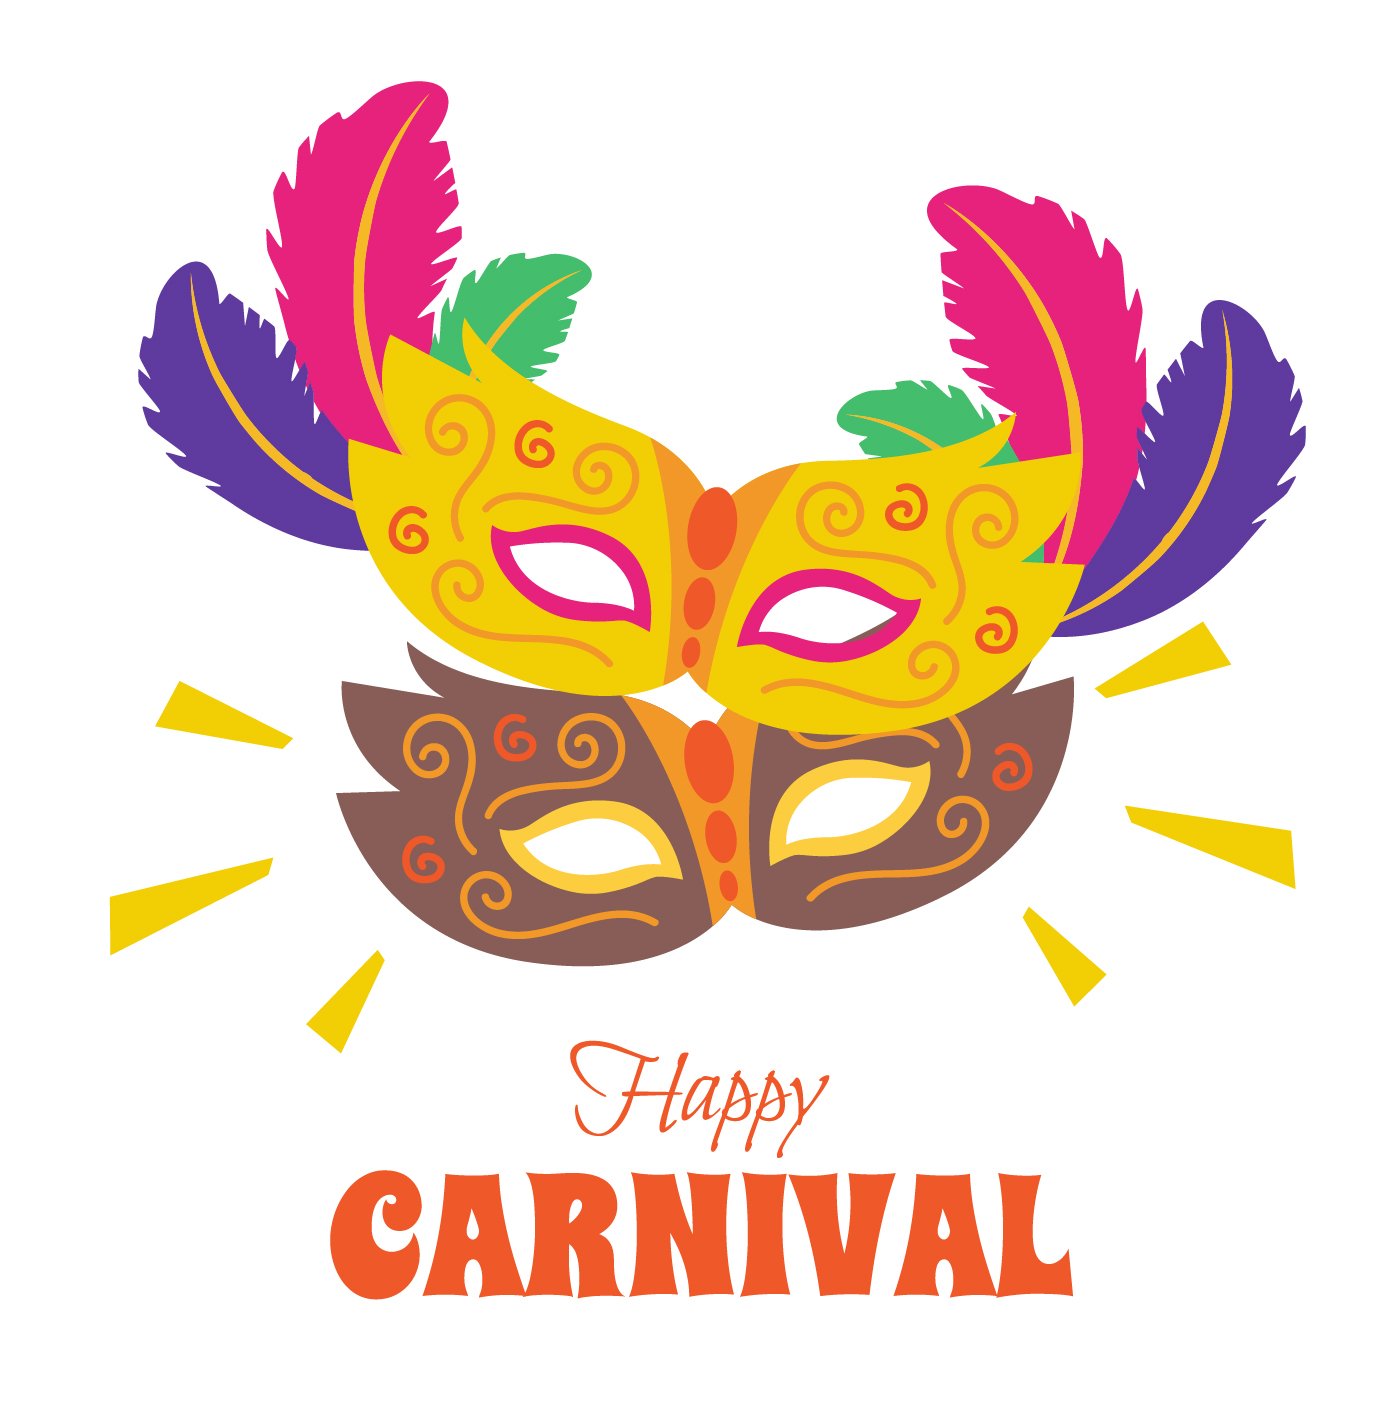 Free Carnival Festival Illustration